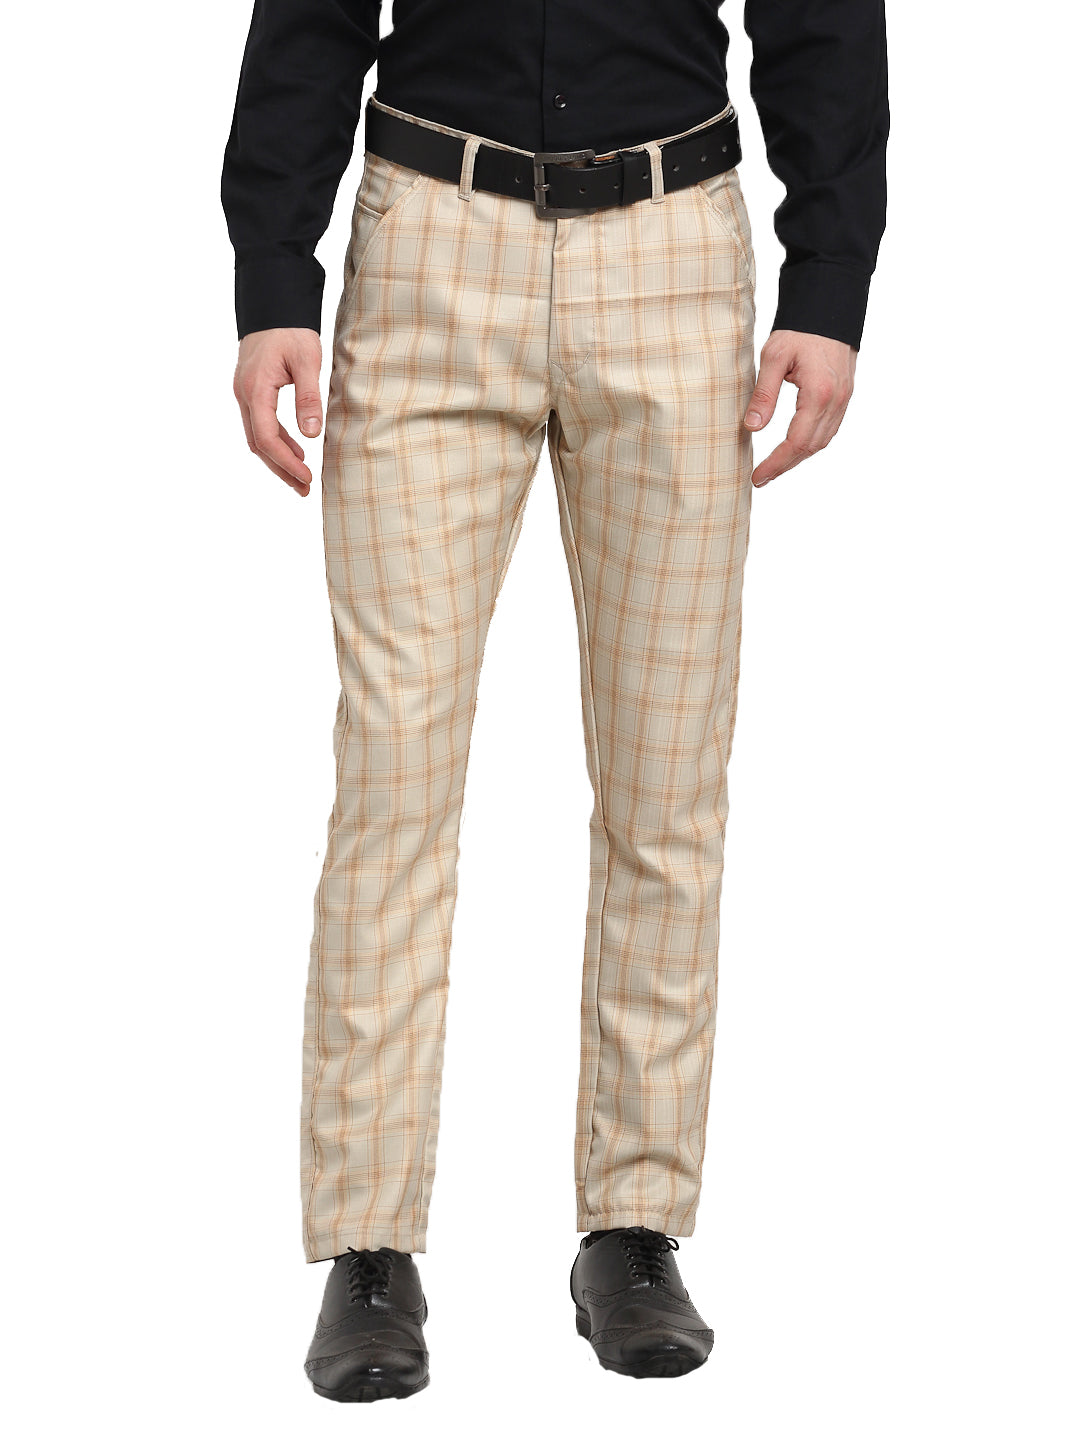 Buy Pesado Men's Cream Slim Fit Polyester Formal Trousers at Amazon.in